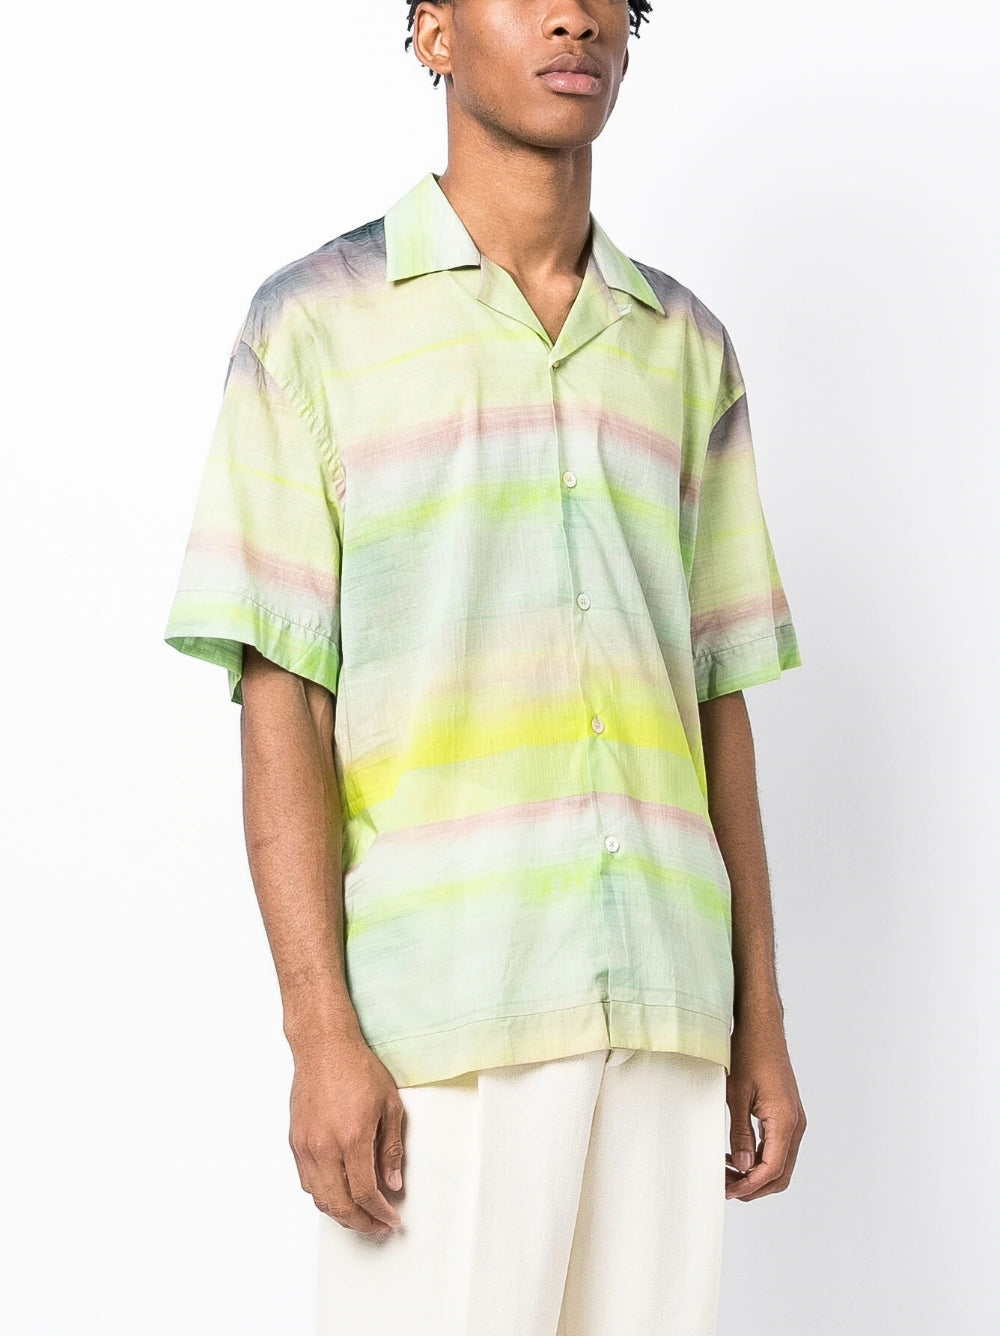 Paul Smith Green/Yellow Striped Shirt